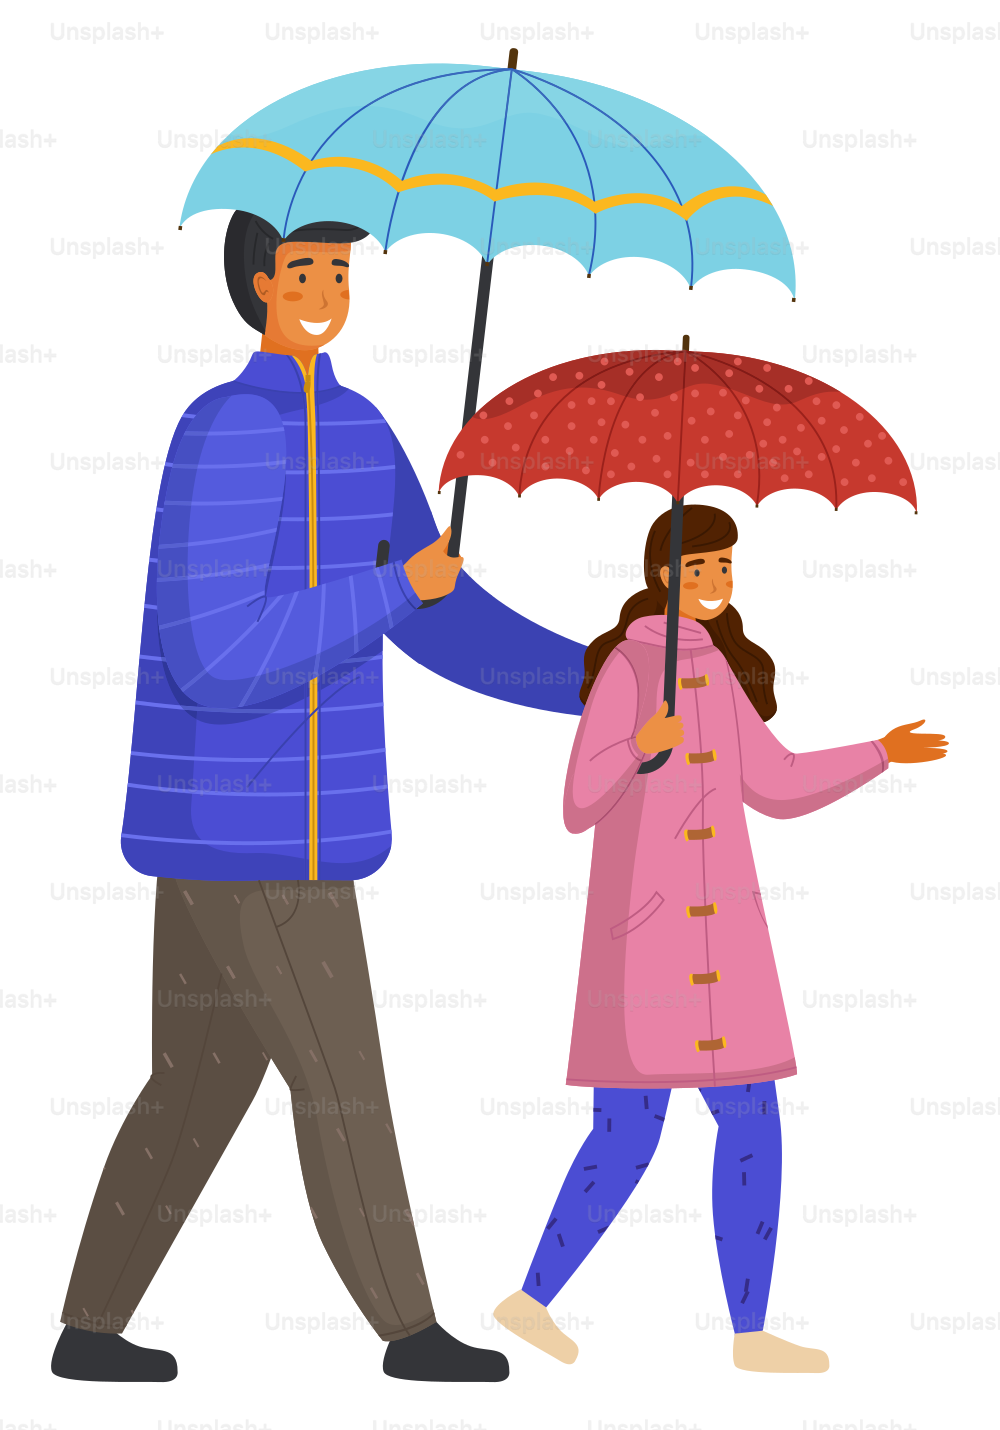 Clima lluvioso, padre e hija con paraguas aislados en fondo blanco, familia con ropa de abrigo chaqueta y abrigo, hombre adulto joven caminando con niño pequeño, niña adolescente, lluvioso al aire libre